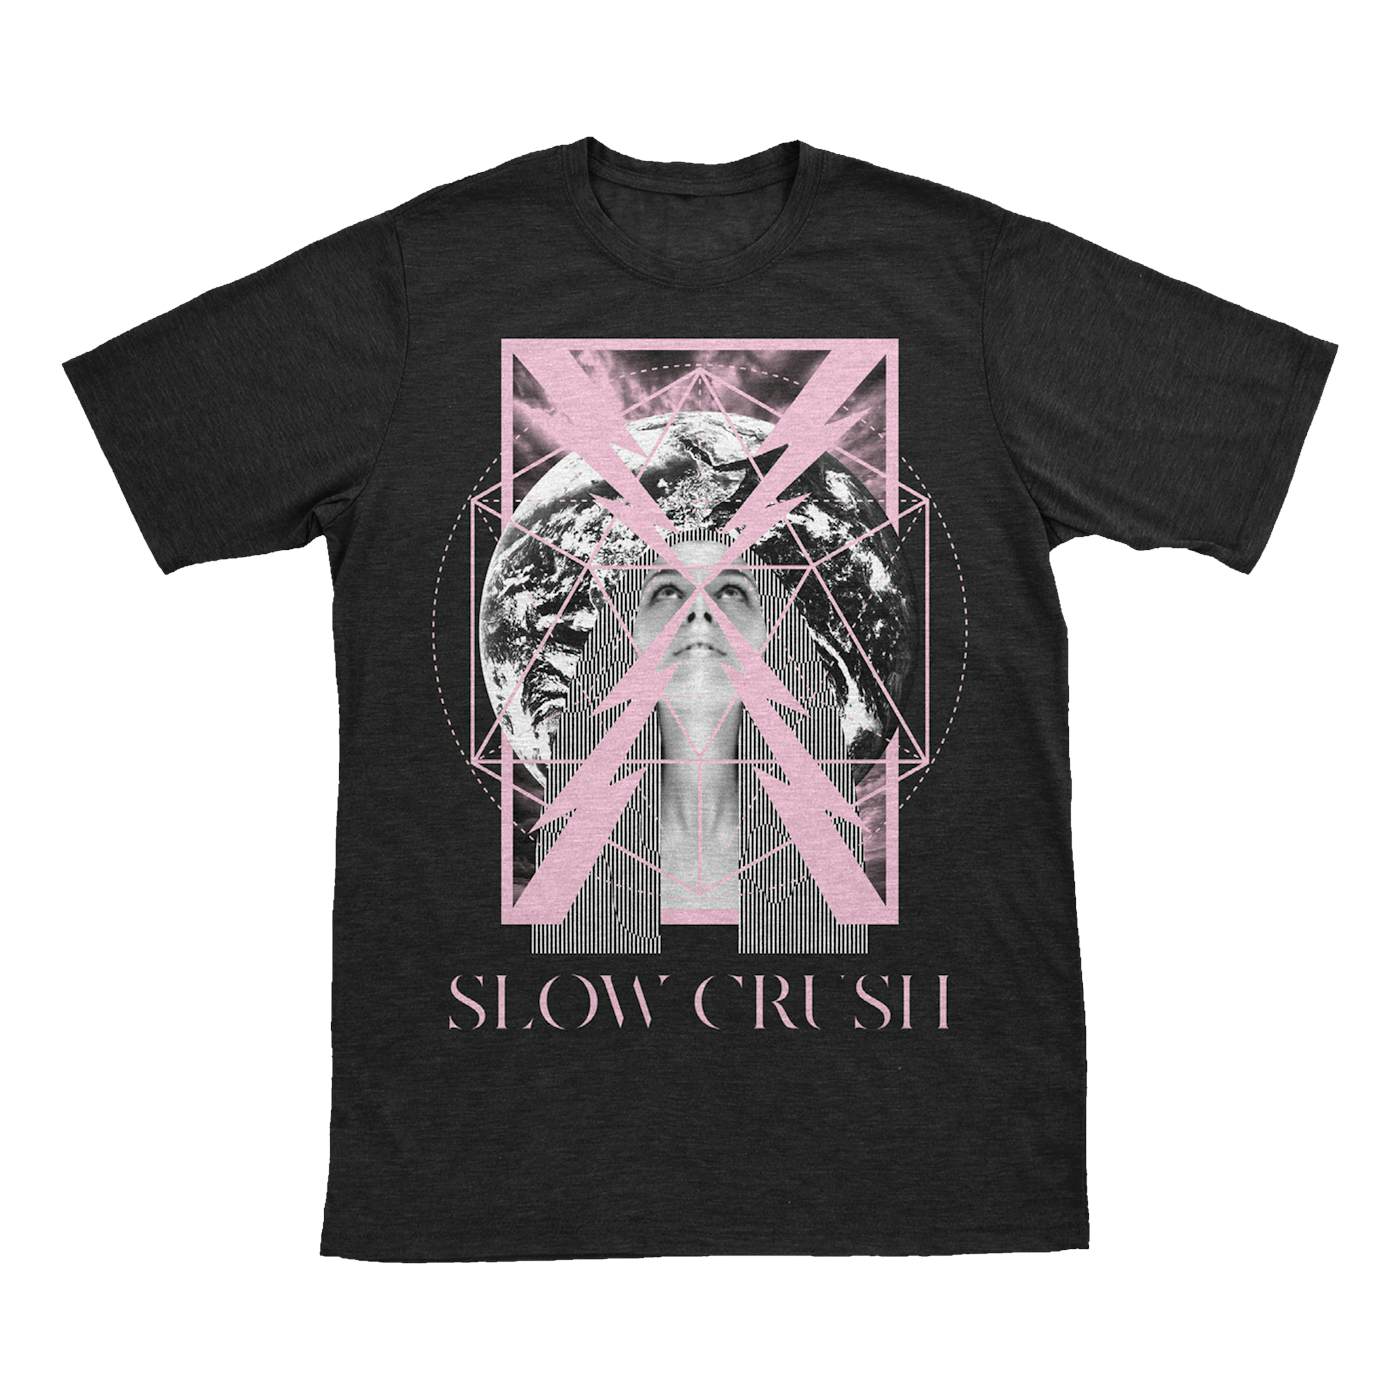 Slow Crush - Black Shirt